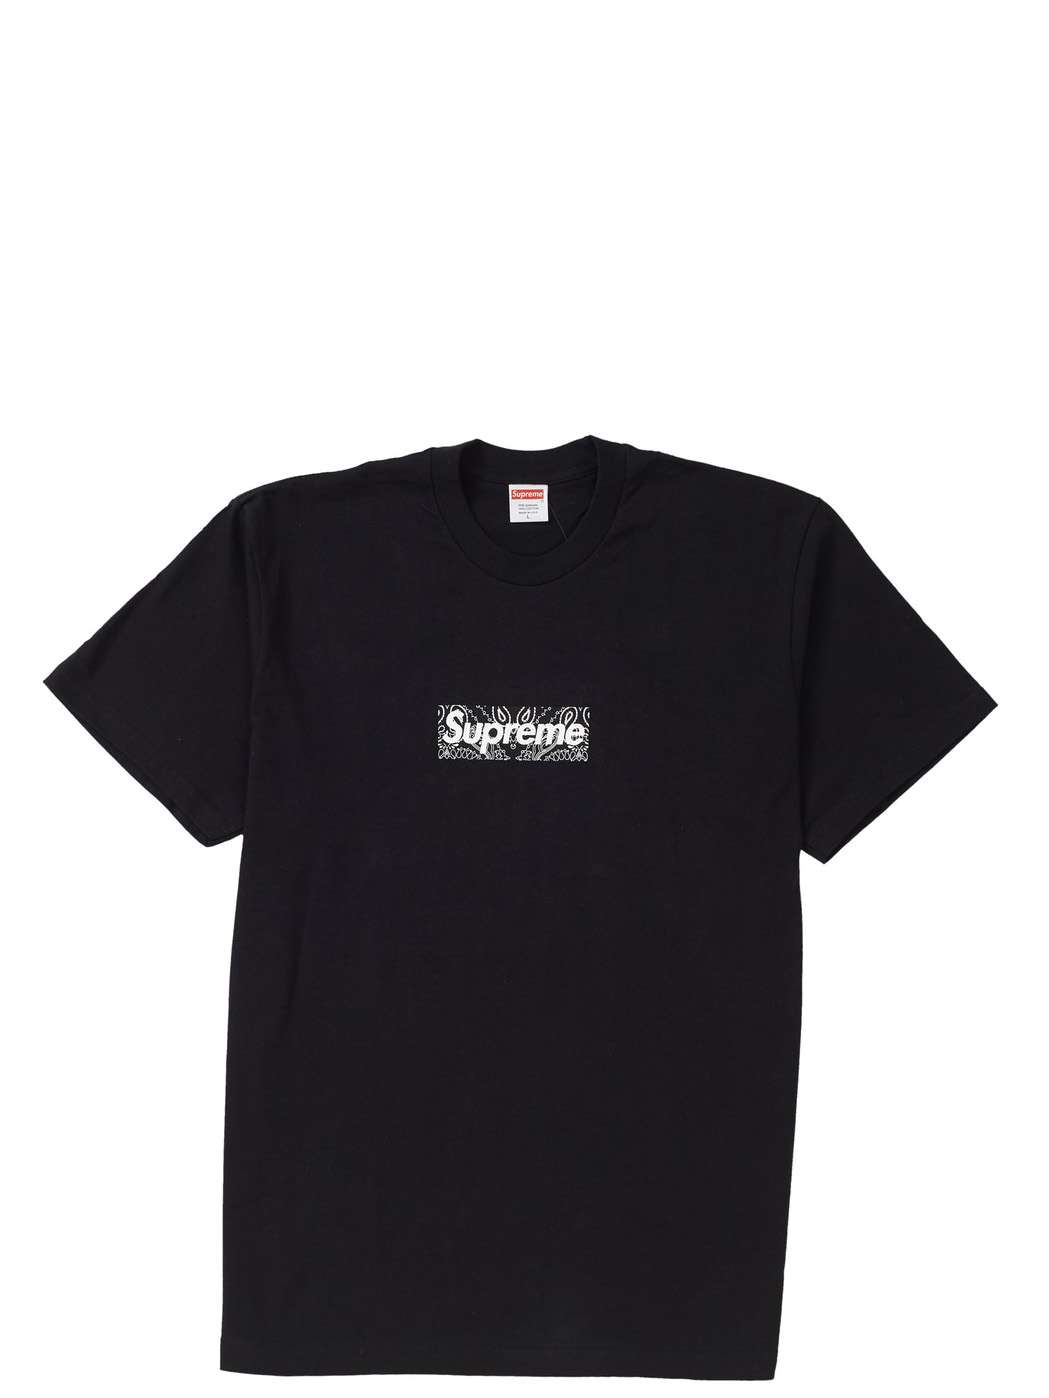 Supreme Bandana Box Logo Tee "Black" - Streetwear Evolution